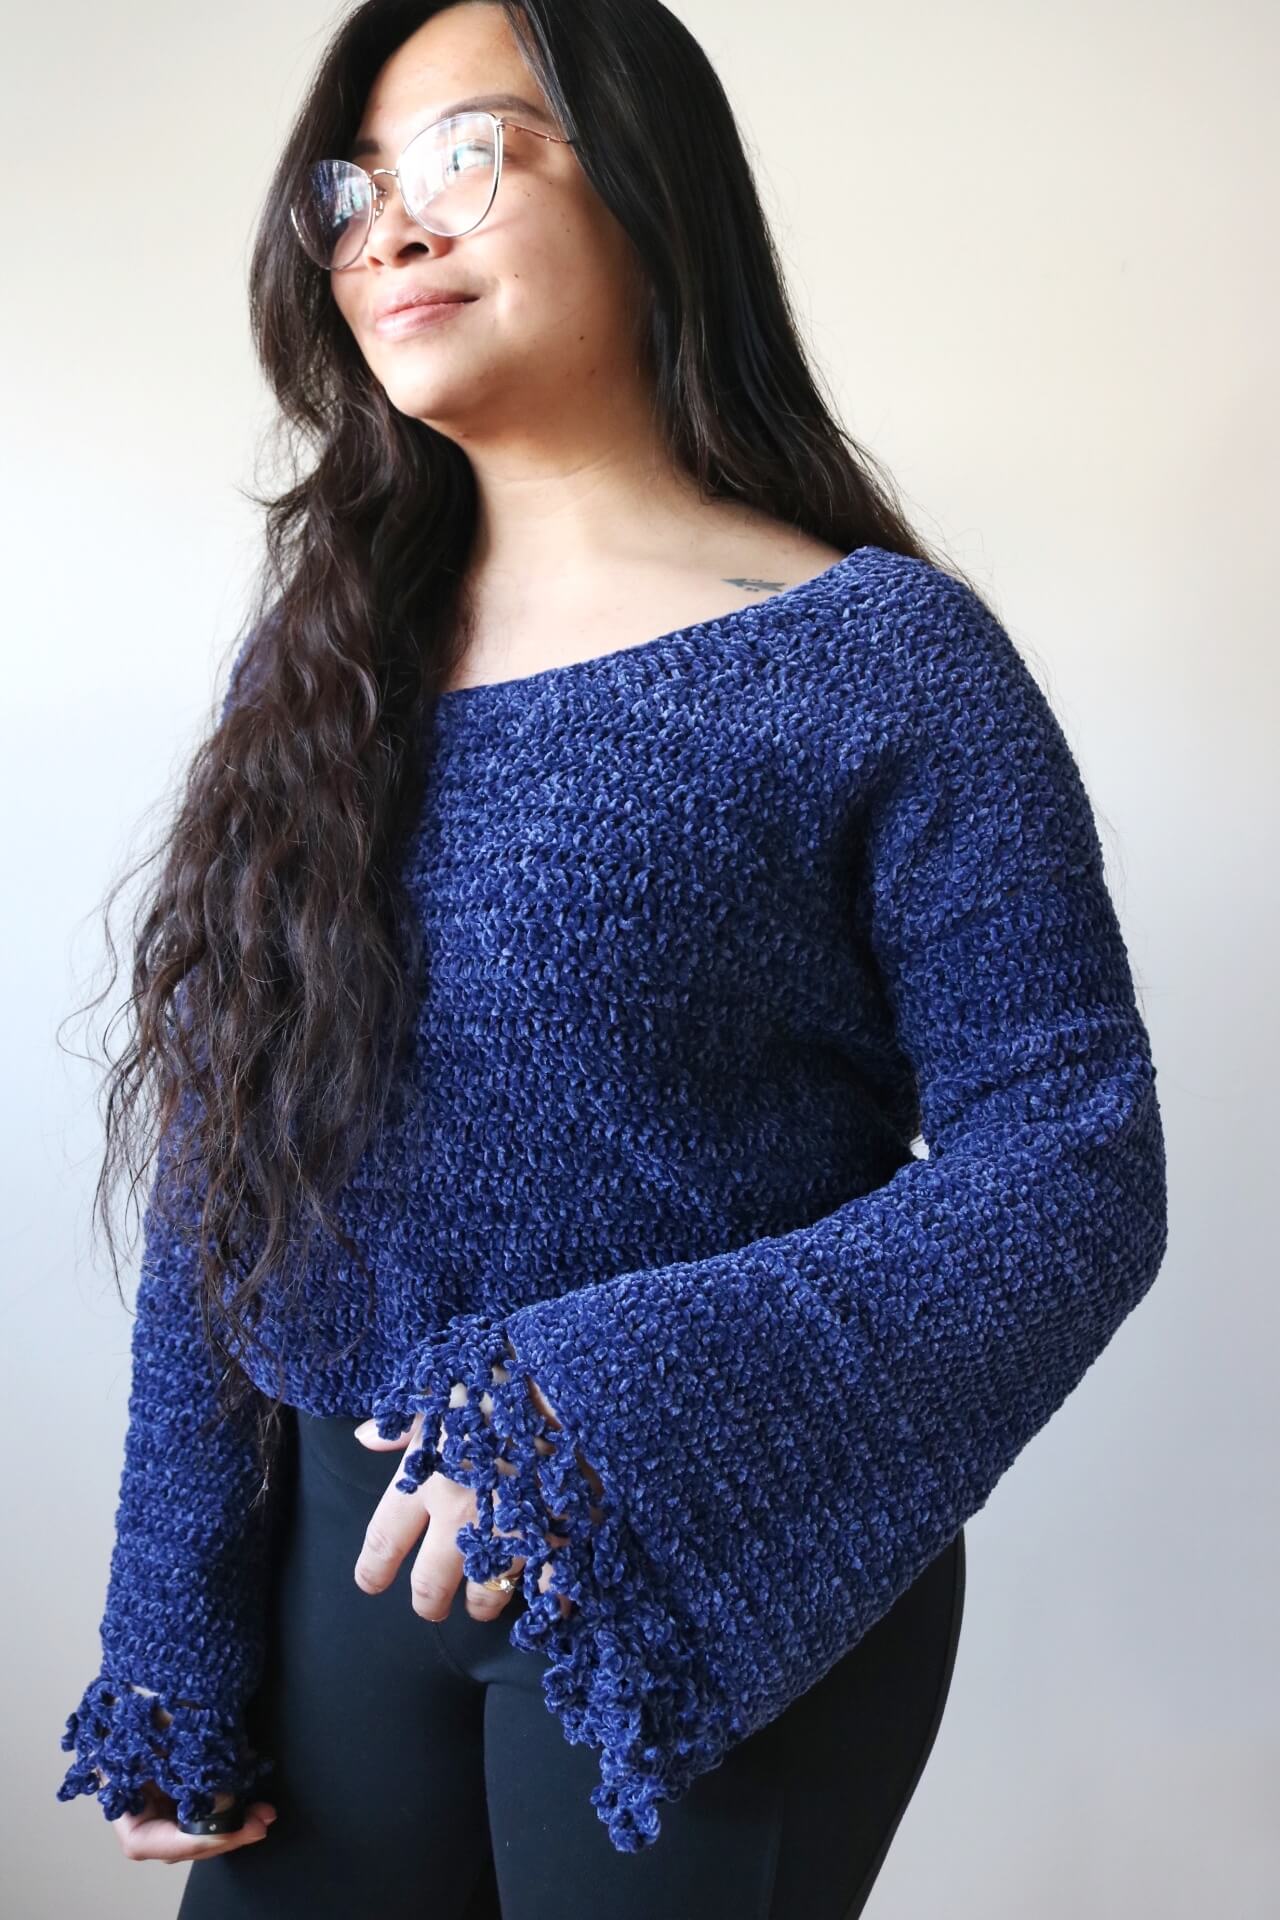 crochet sweater patterns